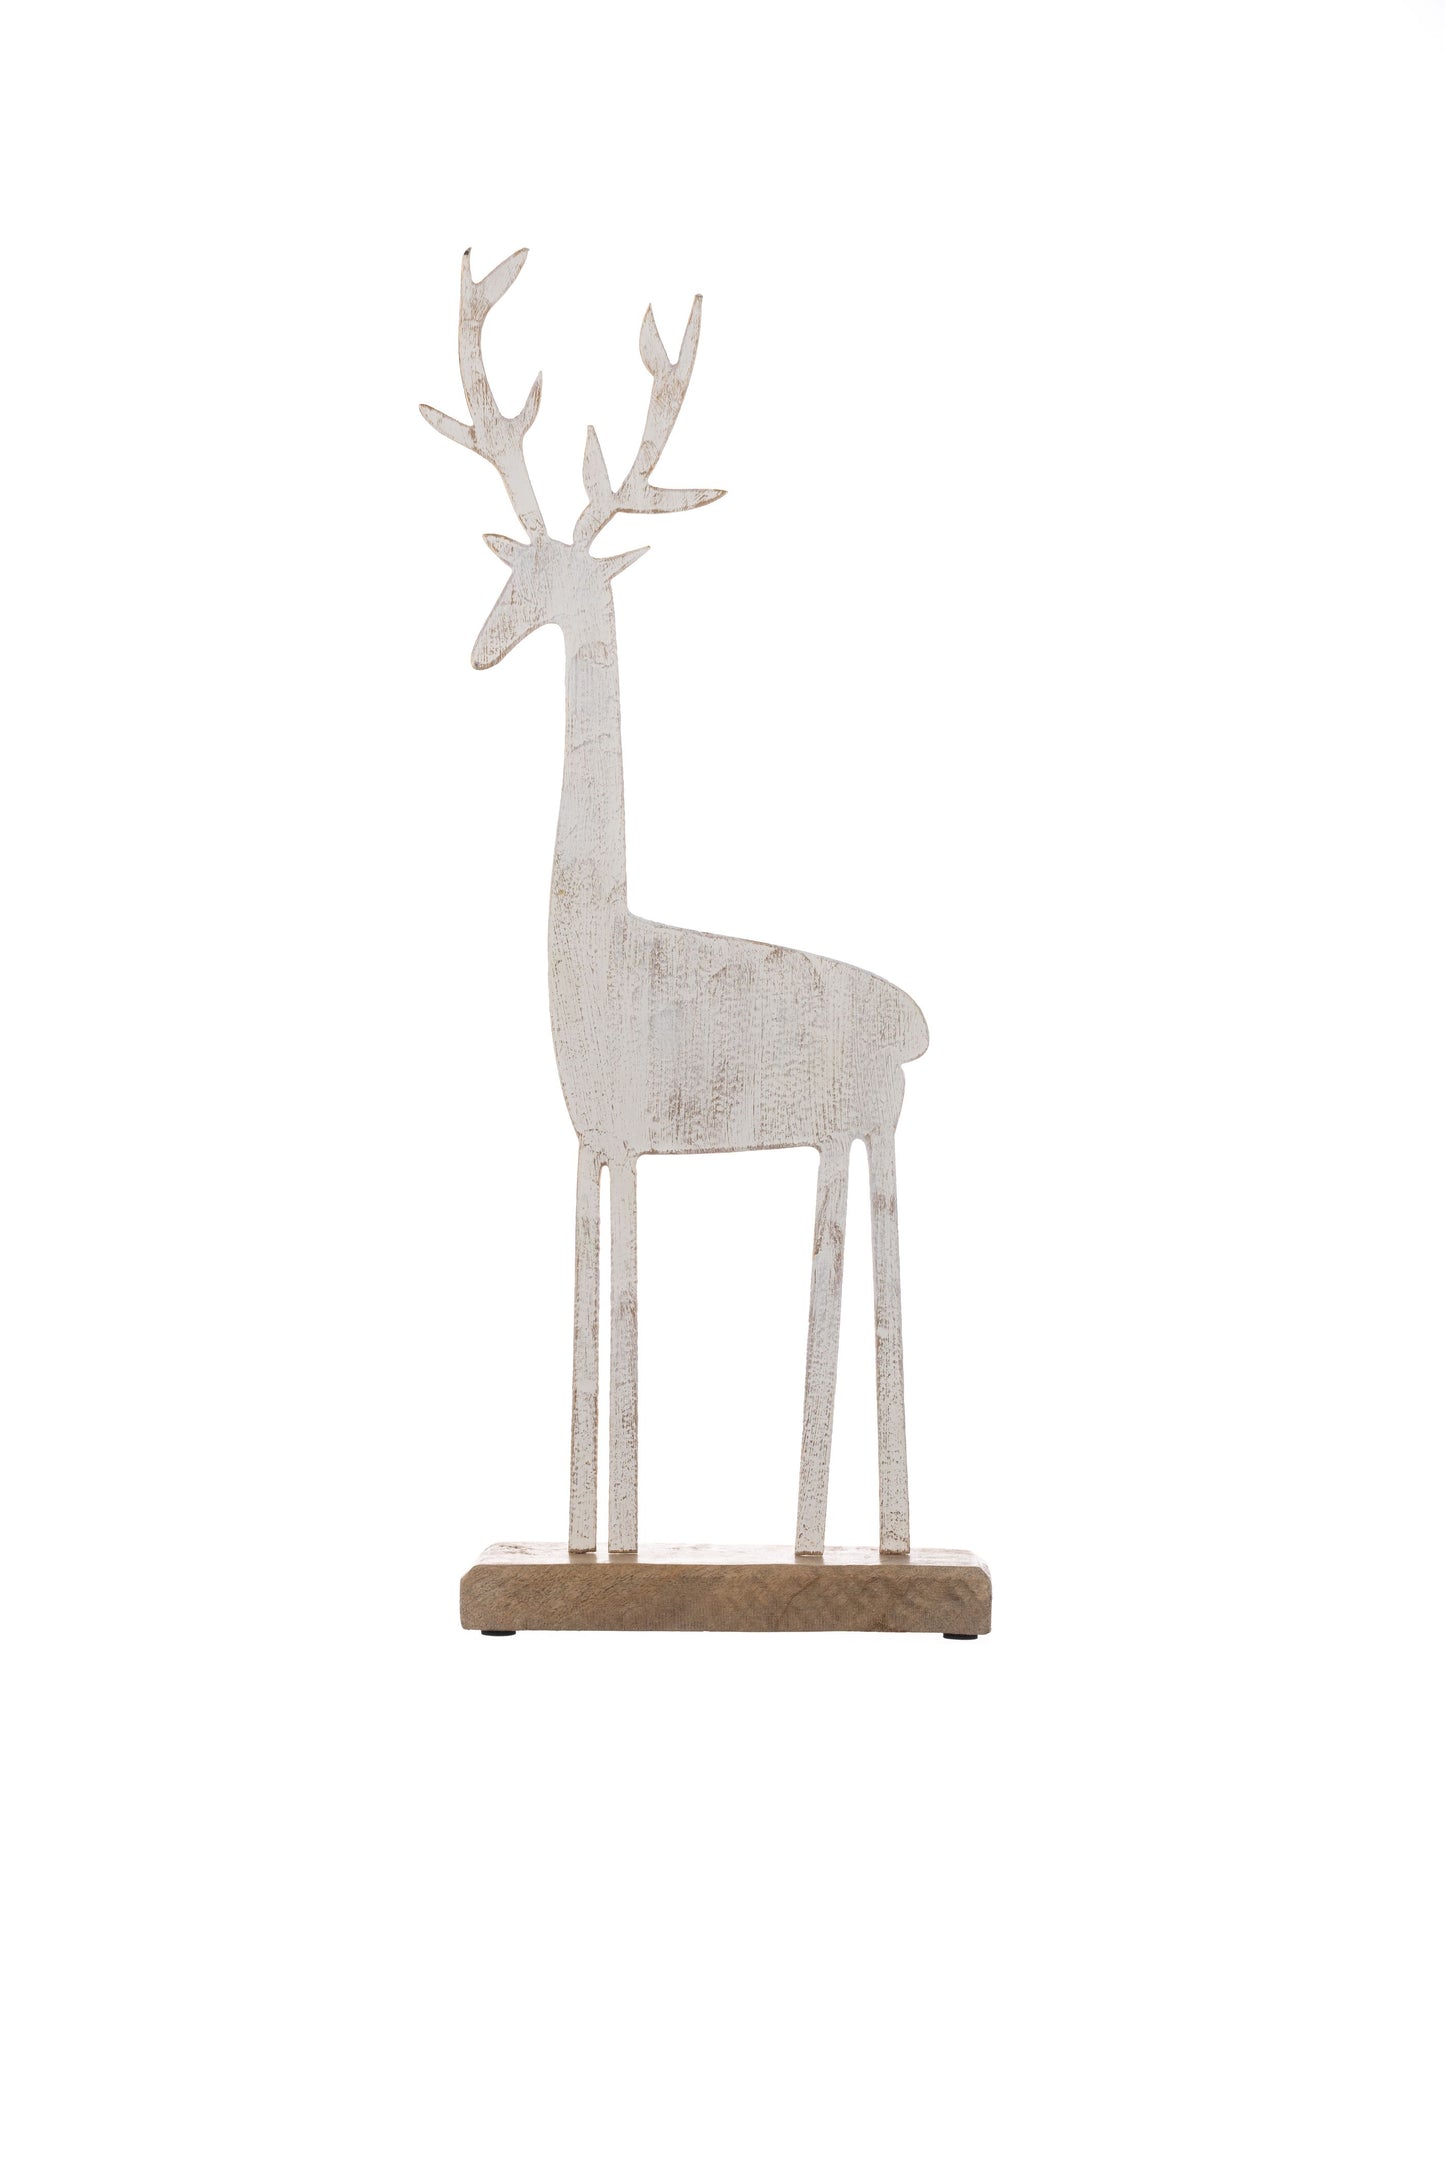 Stylised Reindeer on wooden base